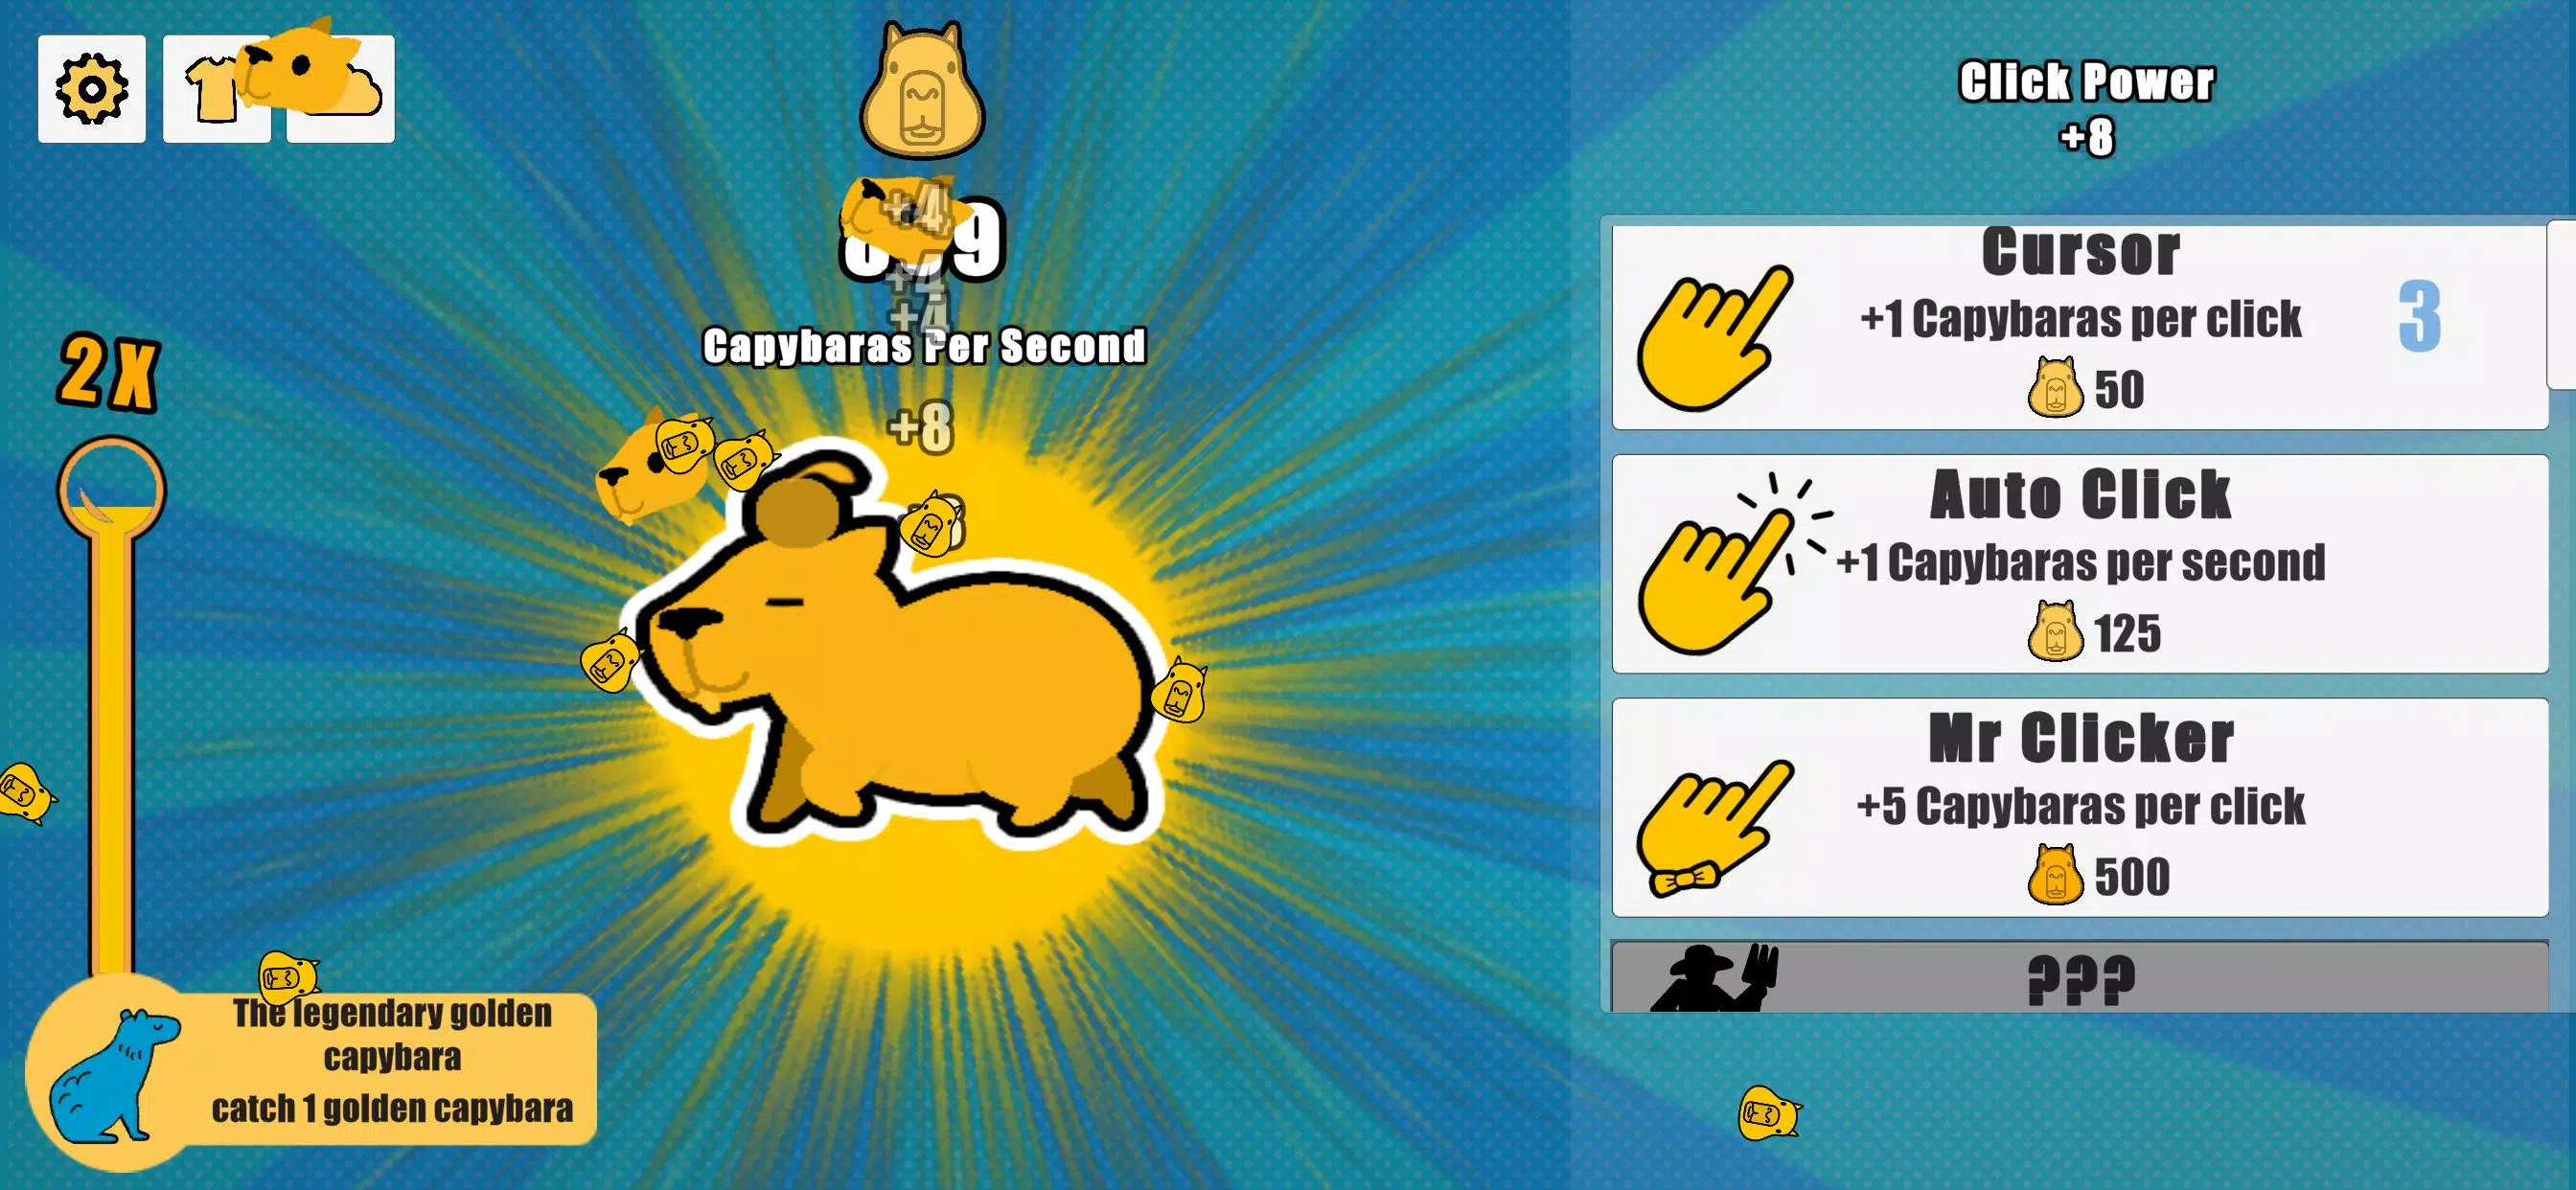 Capybara Clicker APK for Android Download